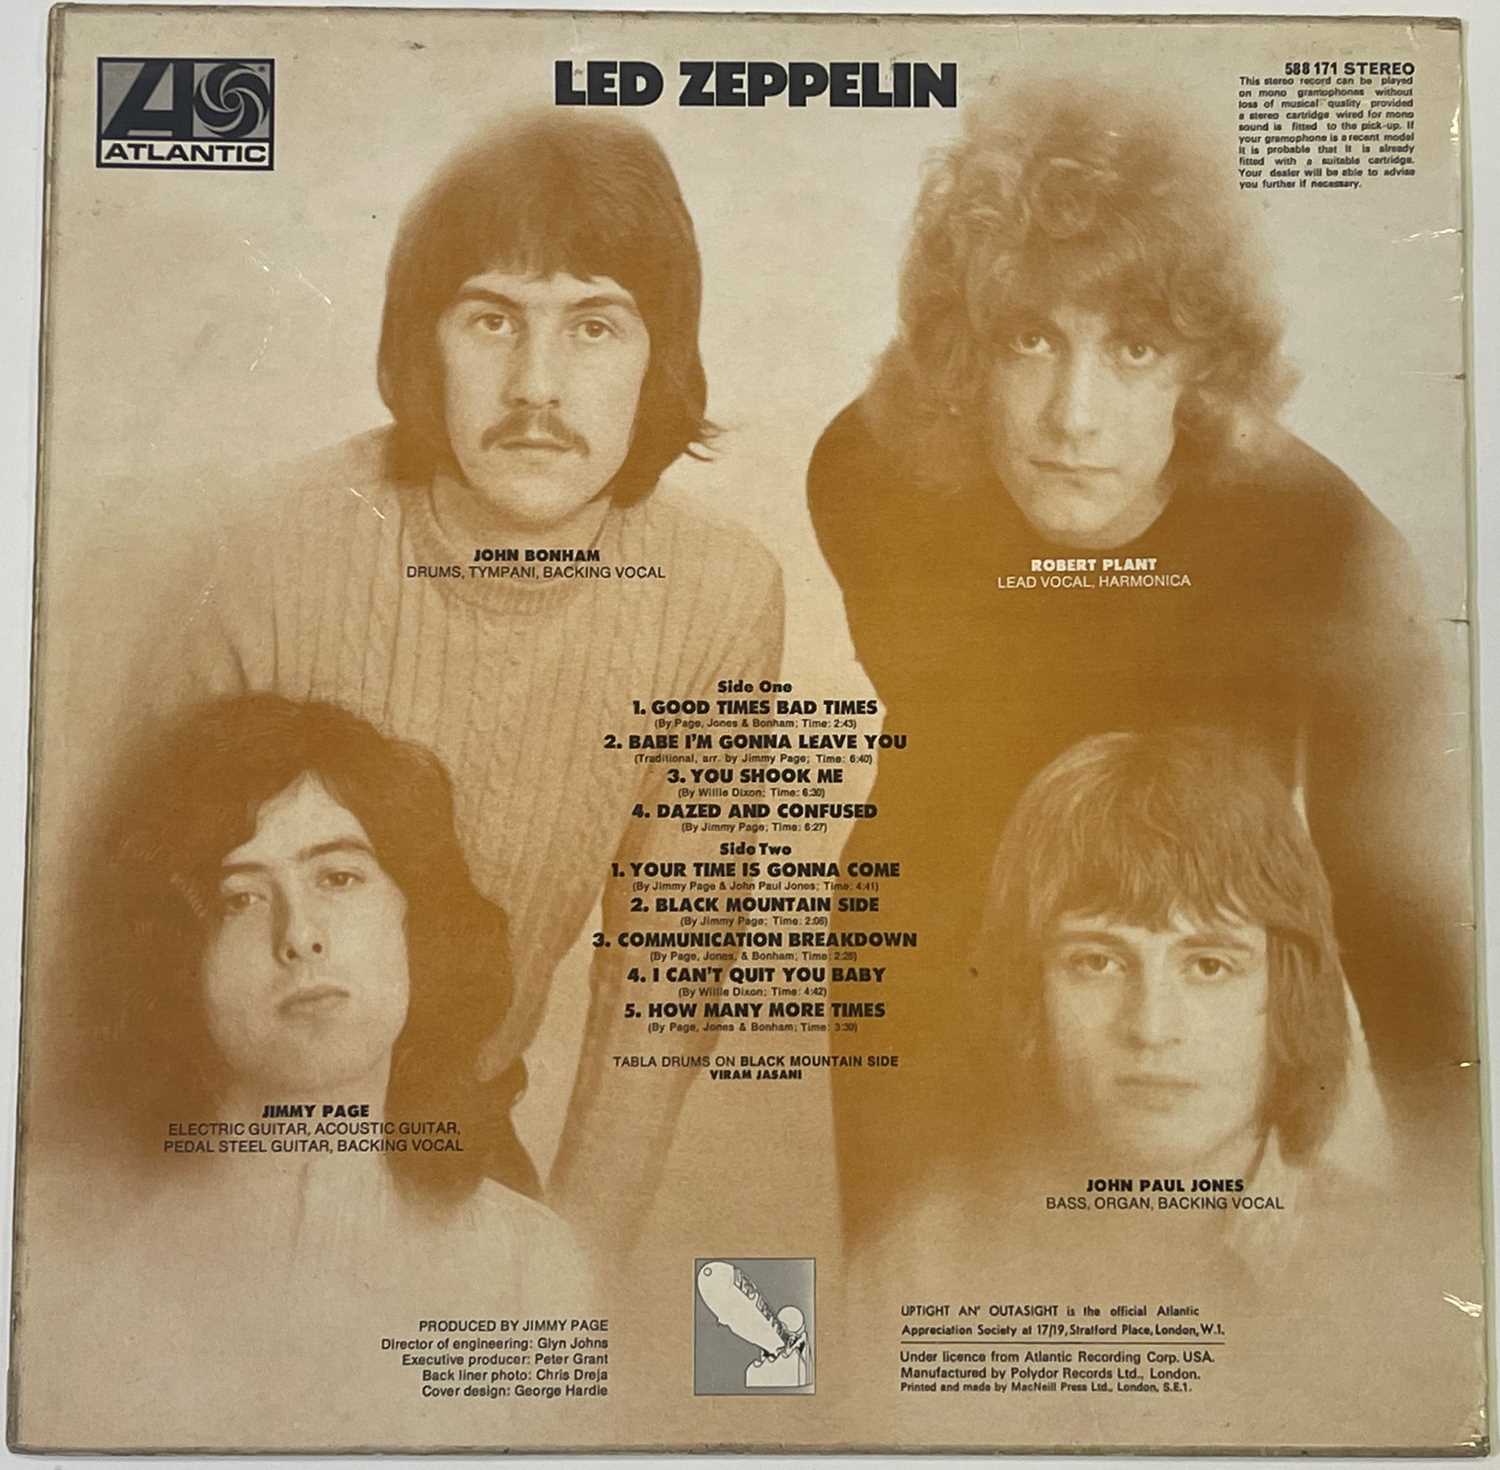 LED ZEPPELIN - LED ZEPPELIN 'I' LP (ORIGINAL UK 'SUPERHYPE' LP/SECOND SLEEVE - ATLANTIC 588171) - Image 3 of 3